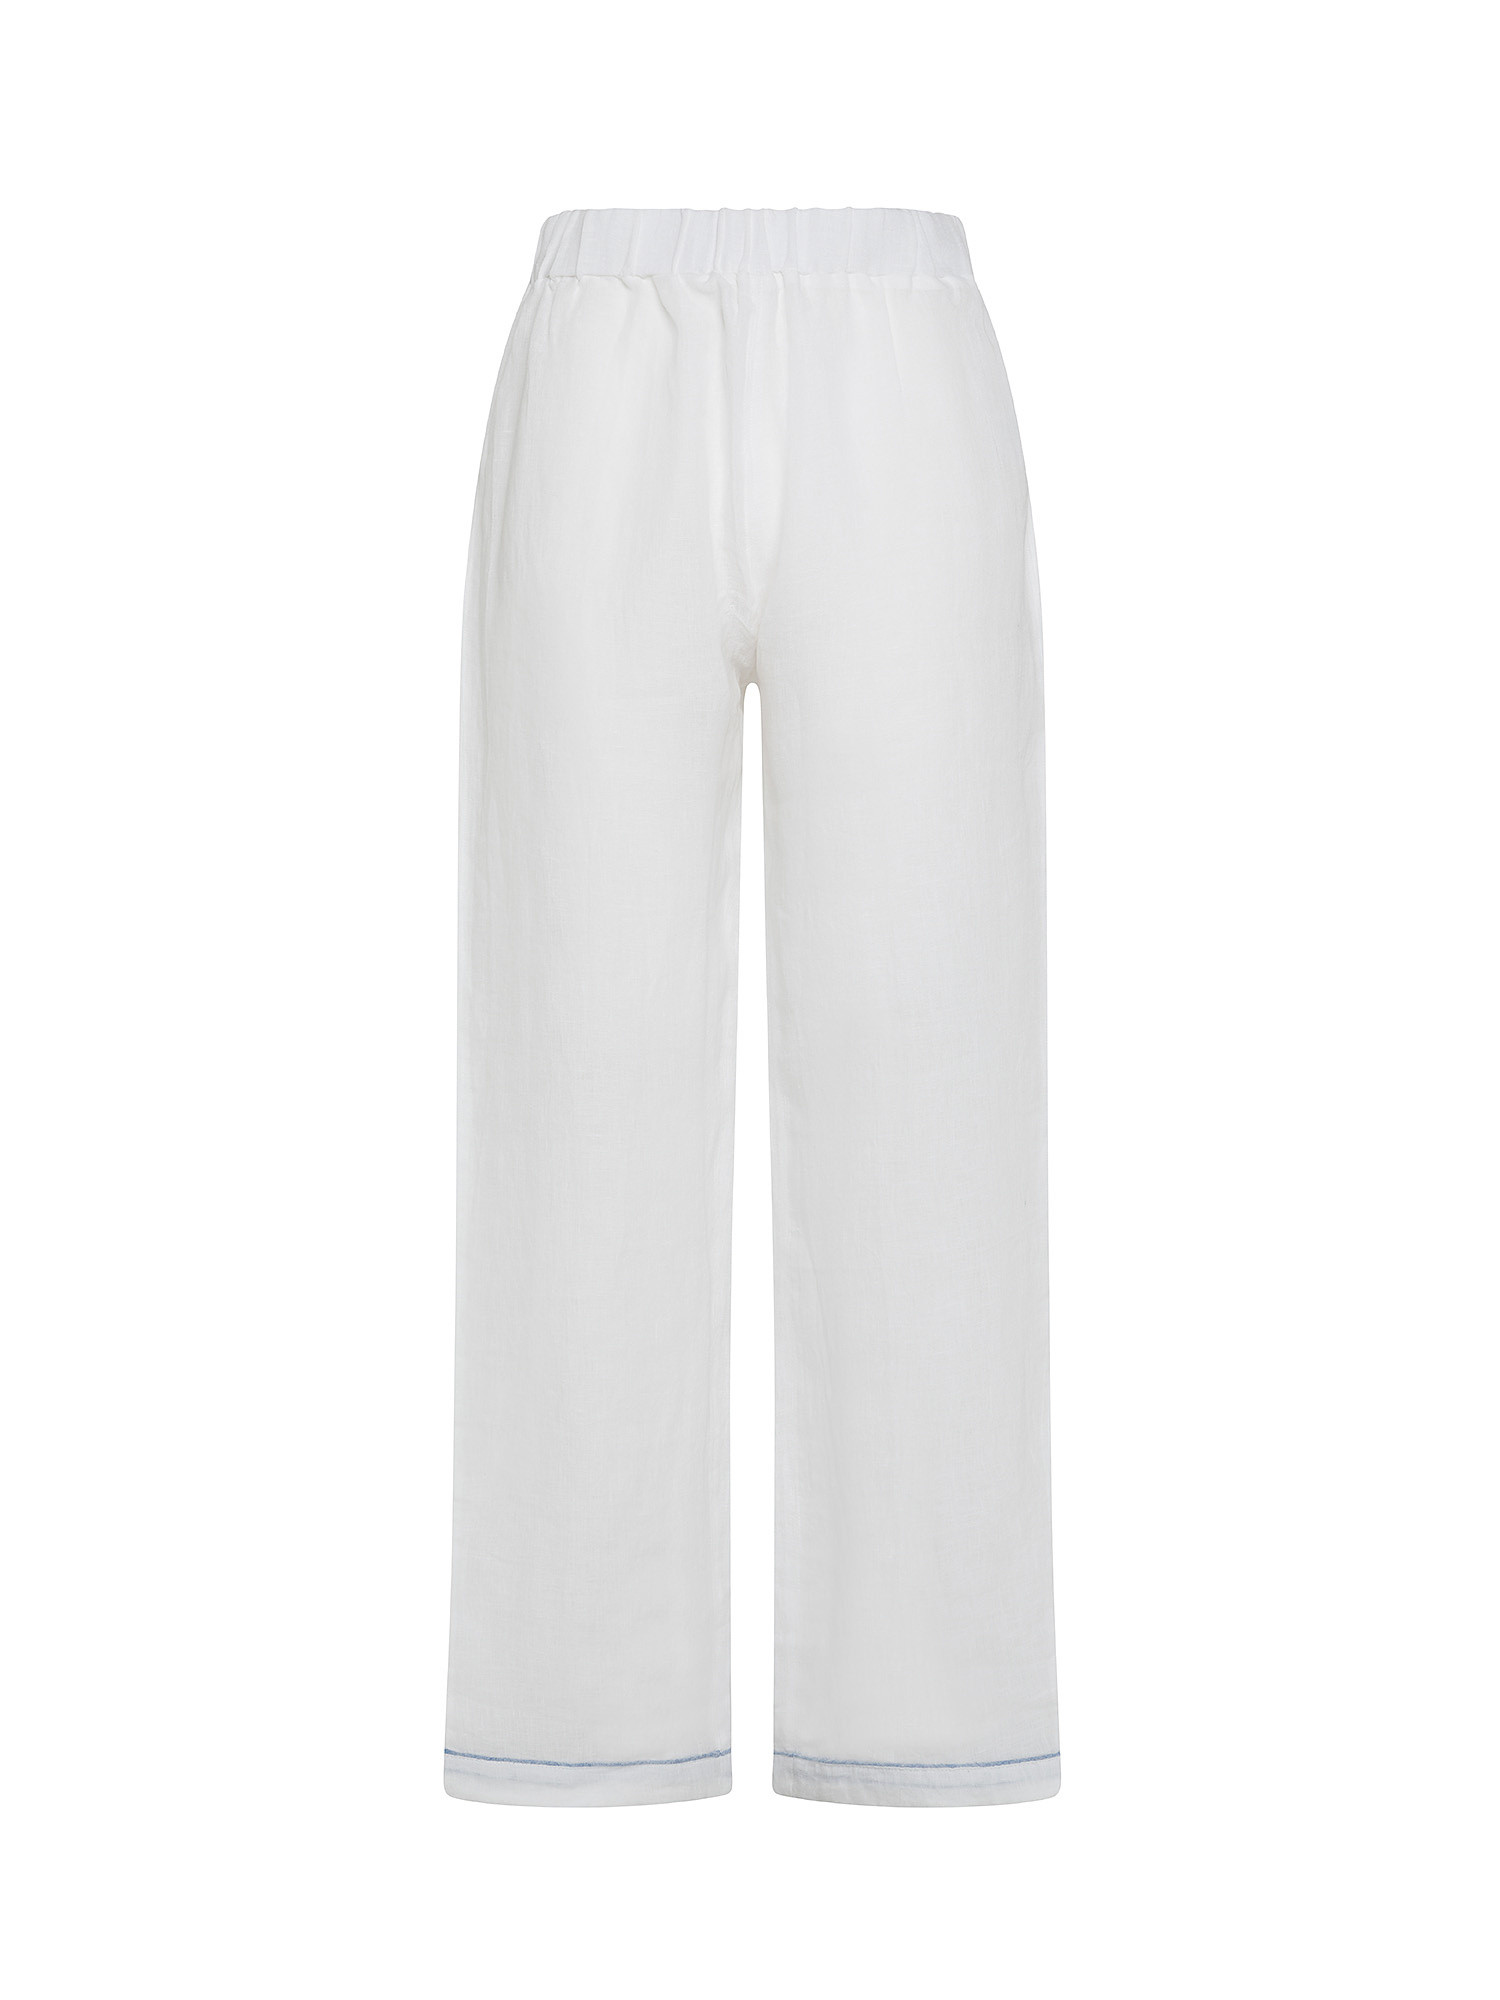 Pantalone pigiama puro lino tinta unita, Bianco, large image number 0